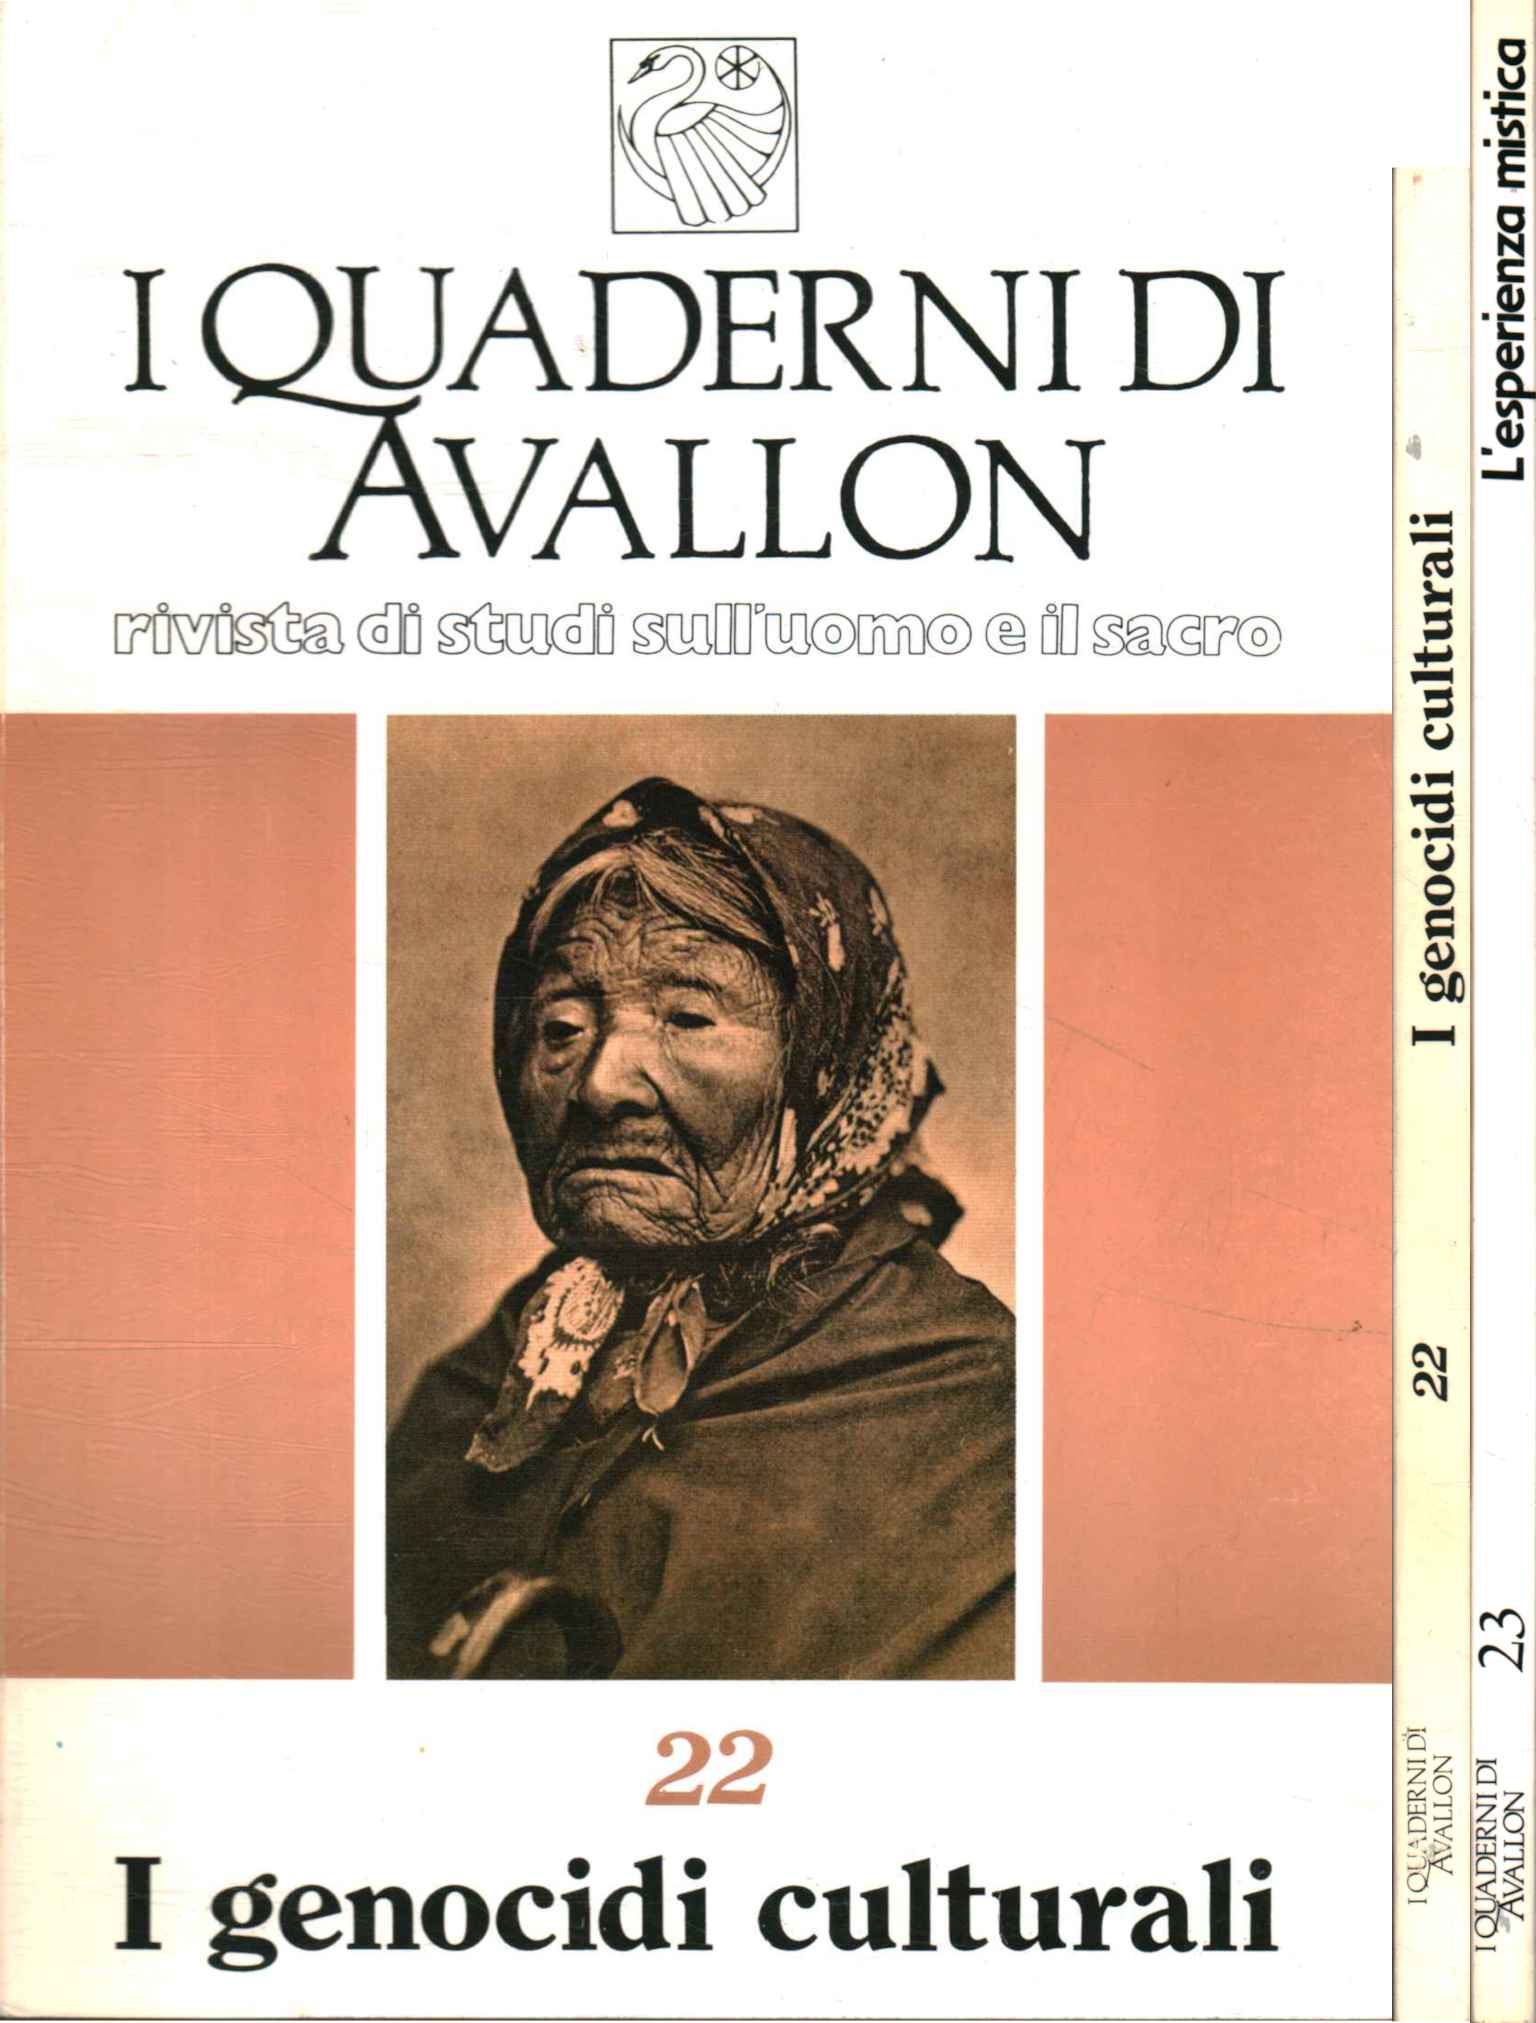 The Avallon Notebooks. Study journal